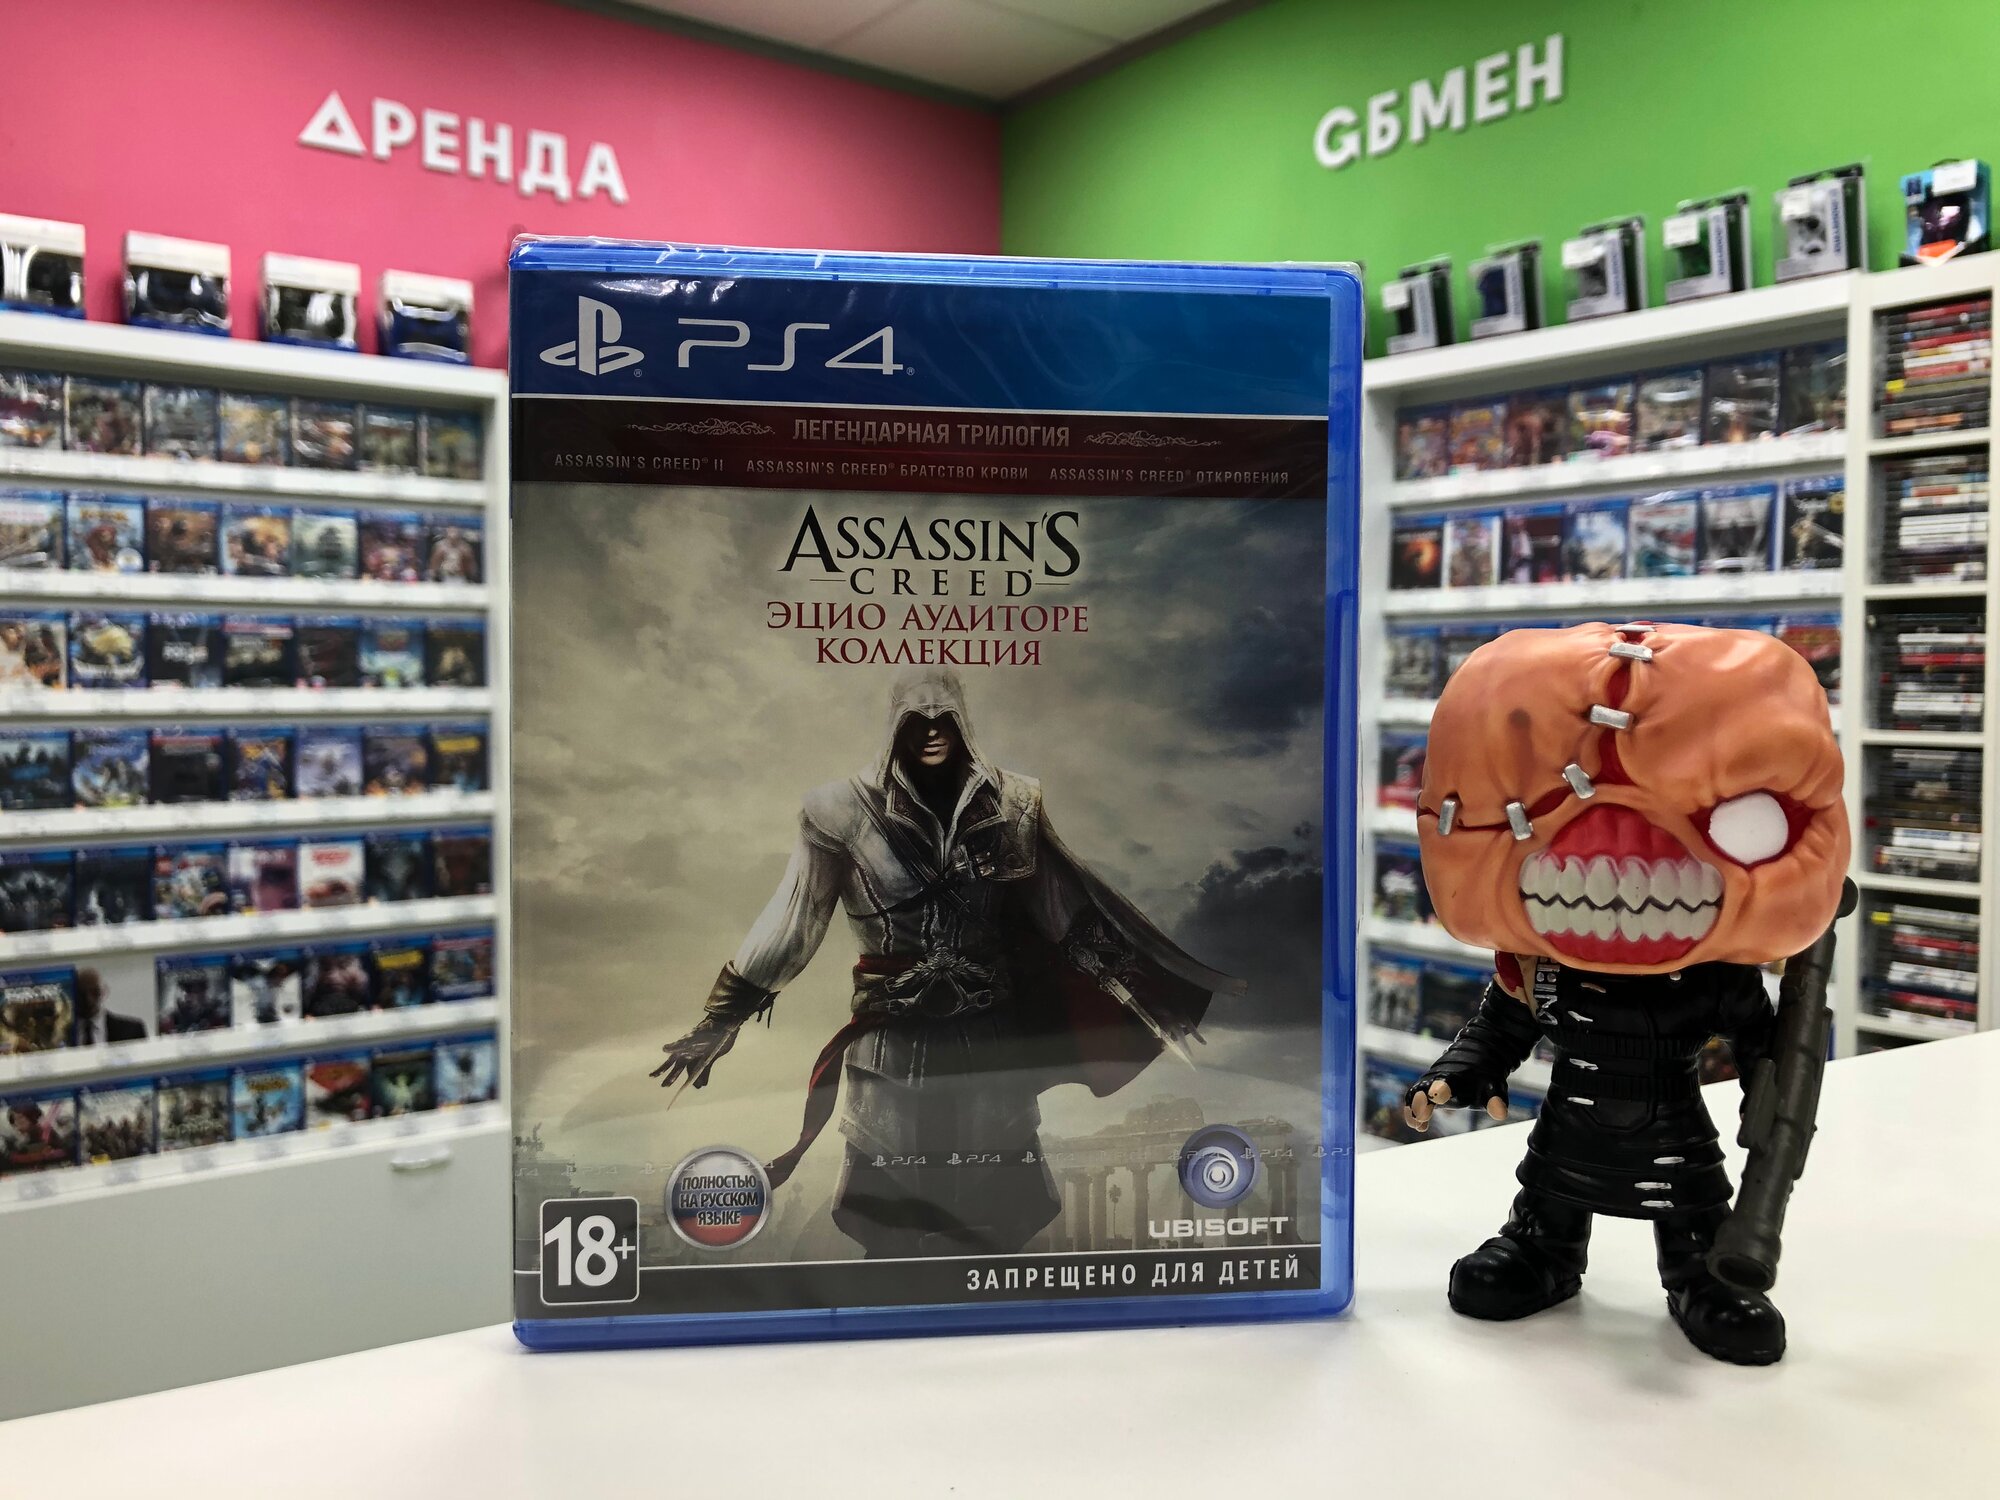 PS4 Assassin's Creed: Эцио Аудиторе. Коллекция